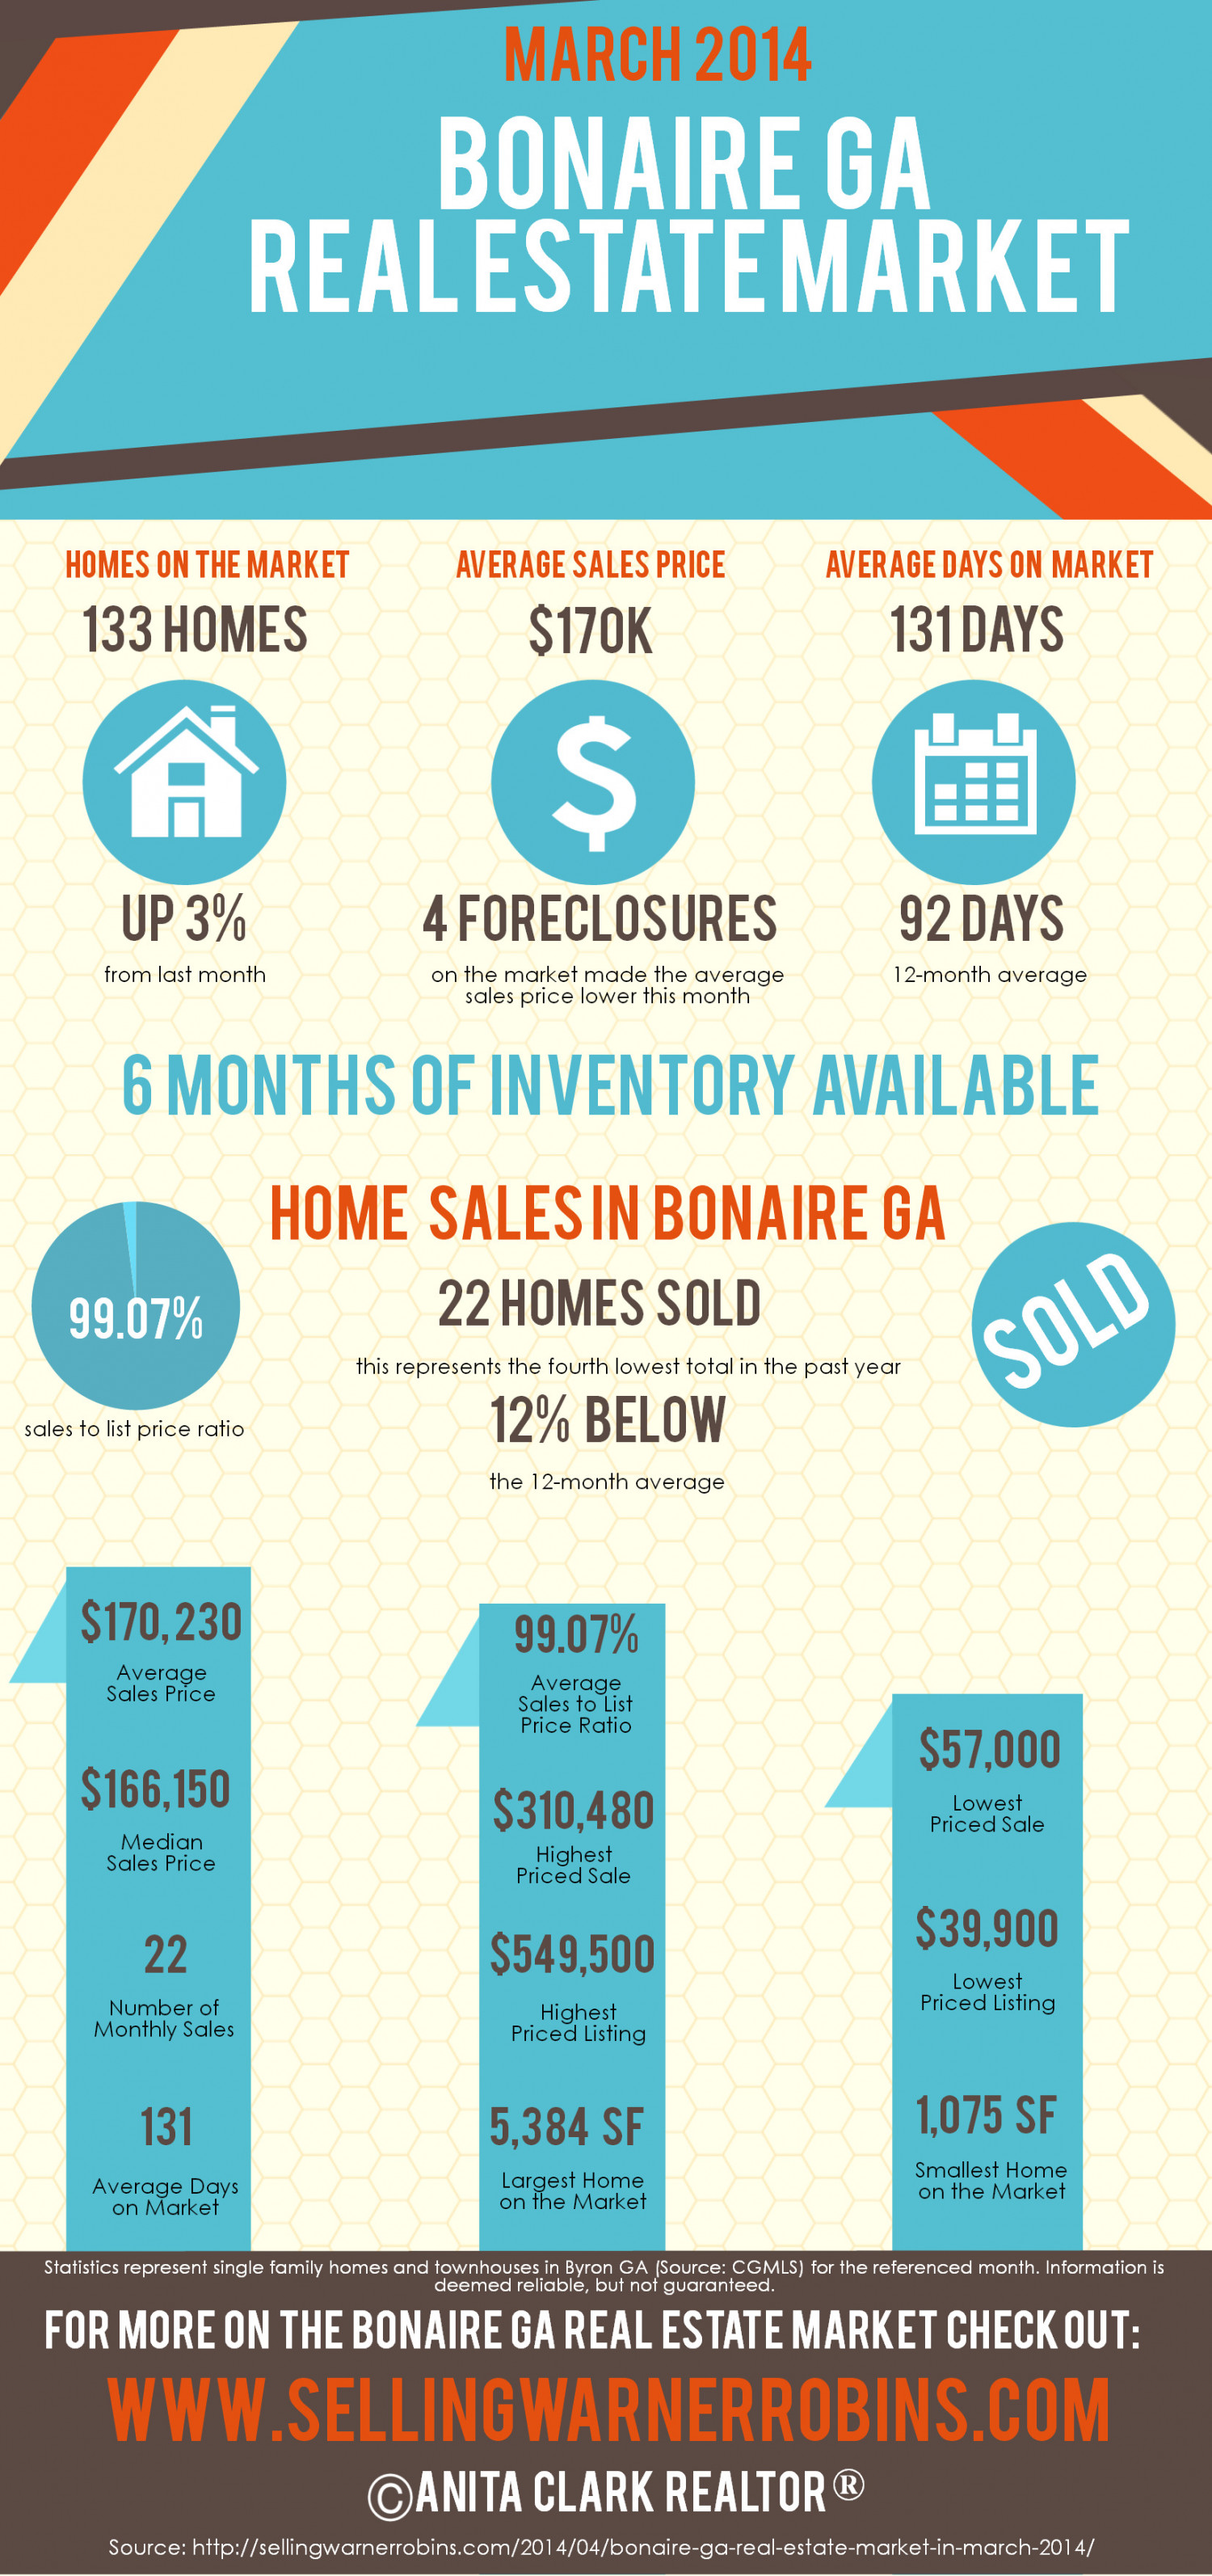 Bonaire GA Real Estate Market in March 2014 Infographic